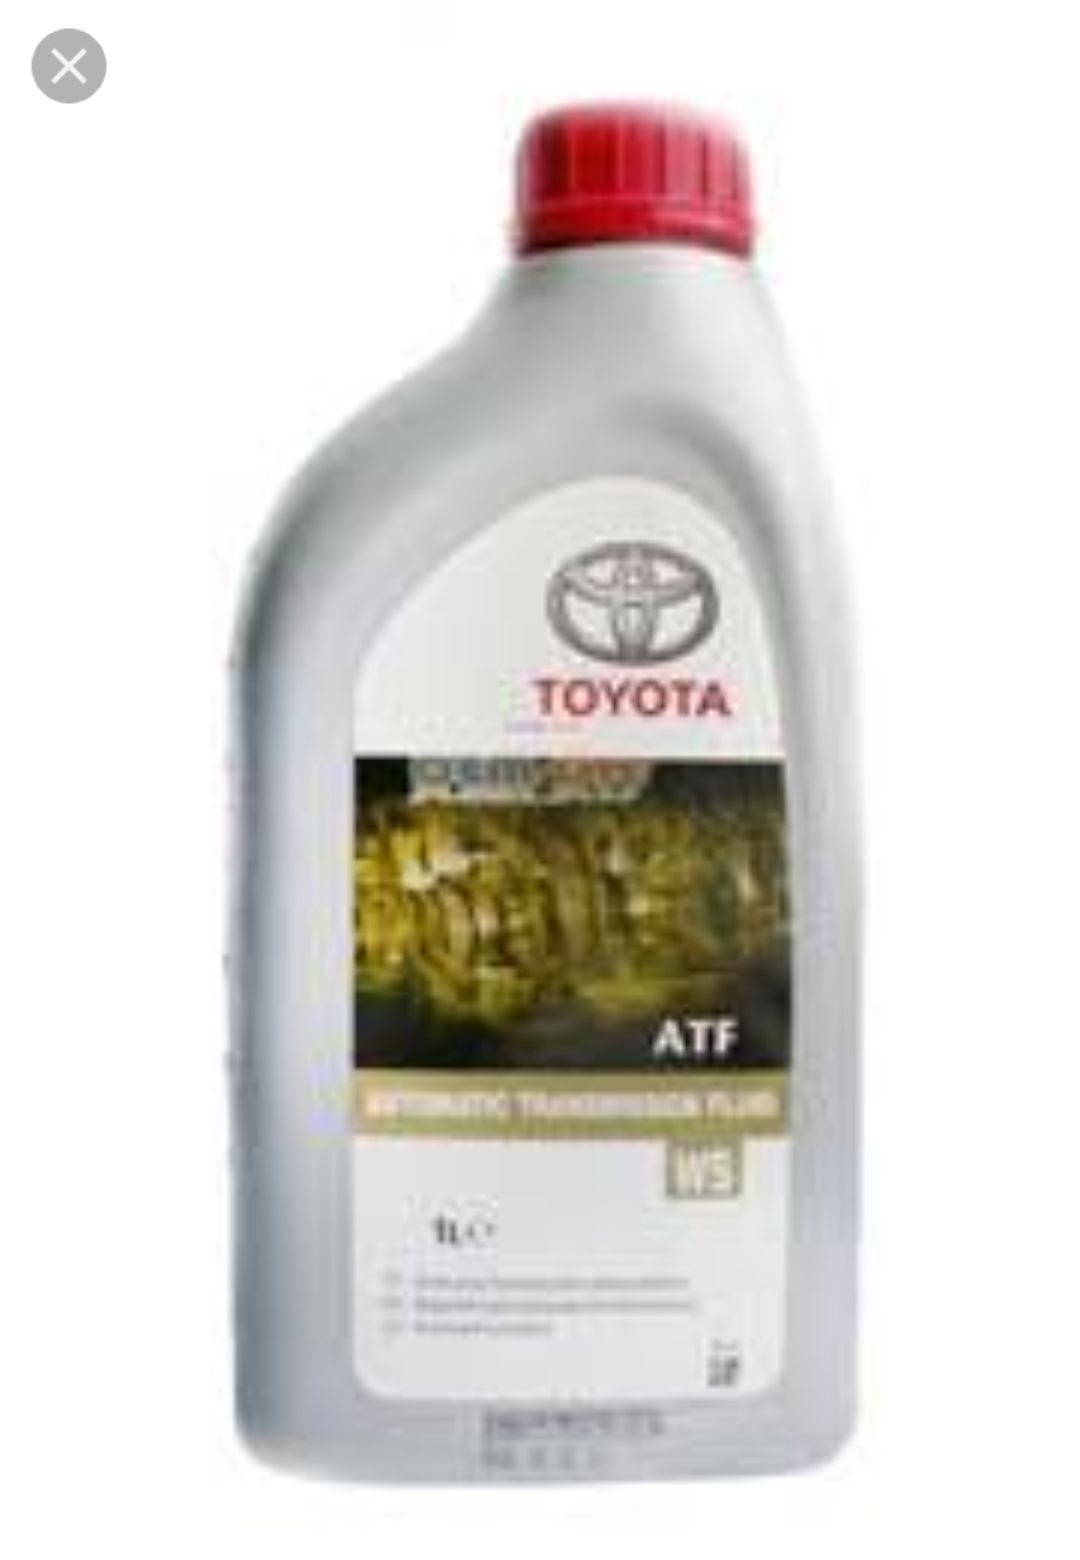 Акпп atf ws. Toyota ATF WS 1л артикул. 08886-81210 Допуск. Toyota WS 20л. Масло трансмиссионное Toyota auto Fluid WS 00289-ATFWS 0,946л.